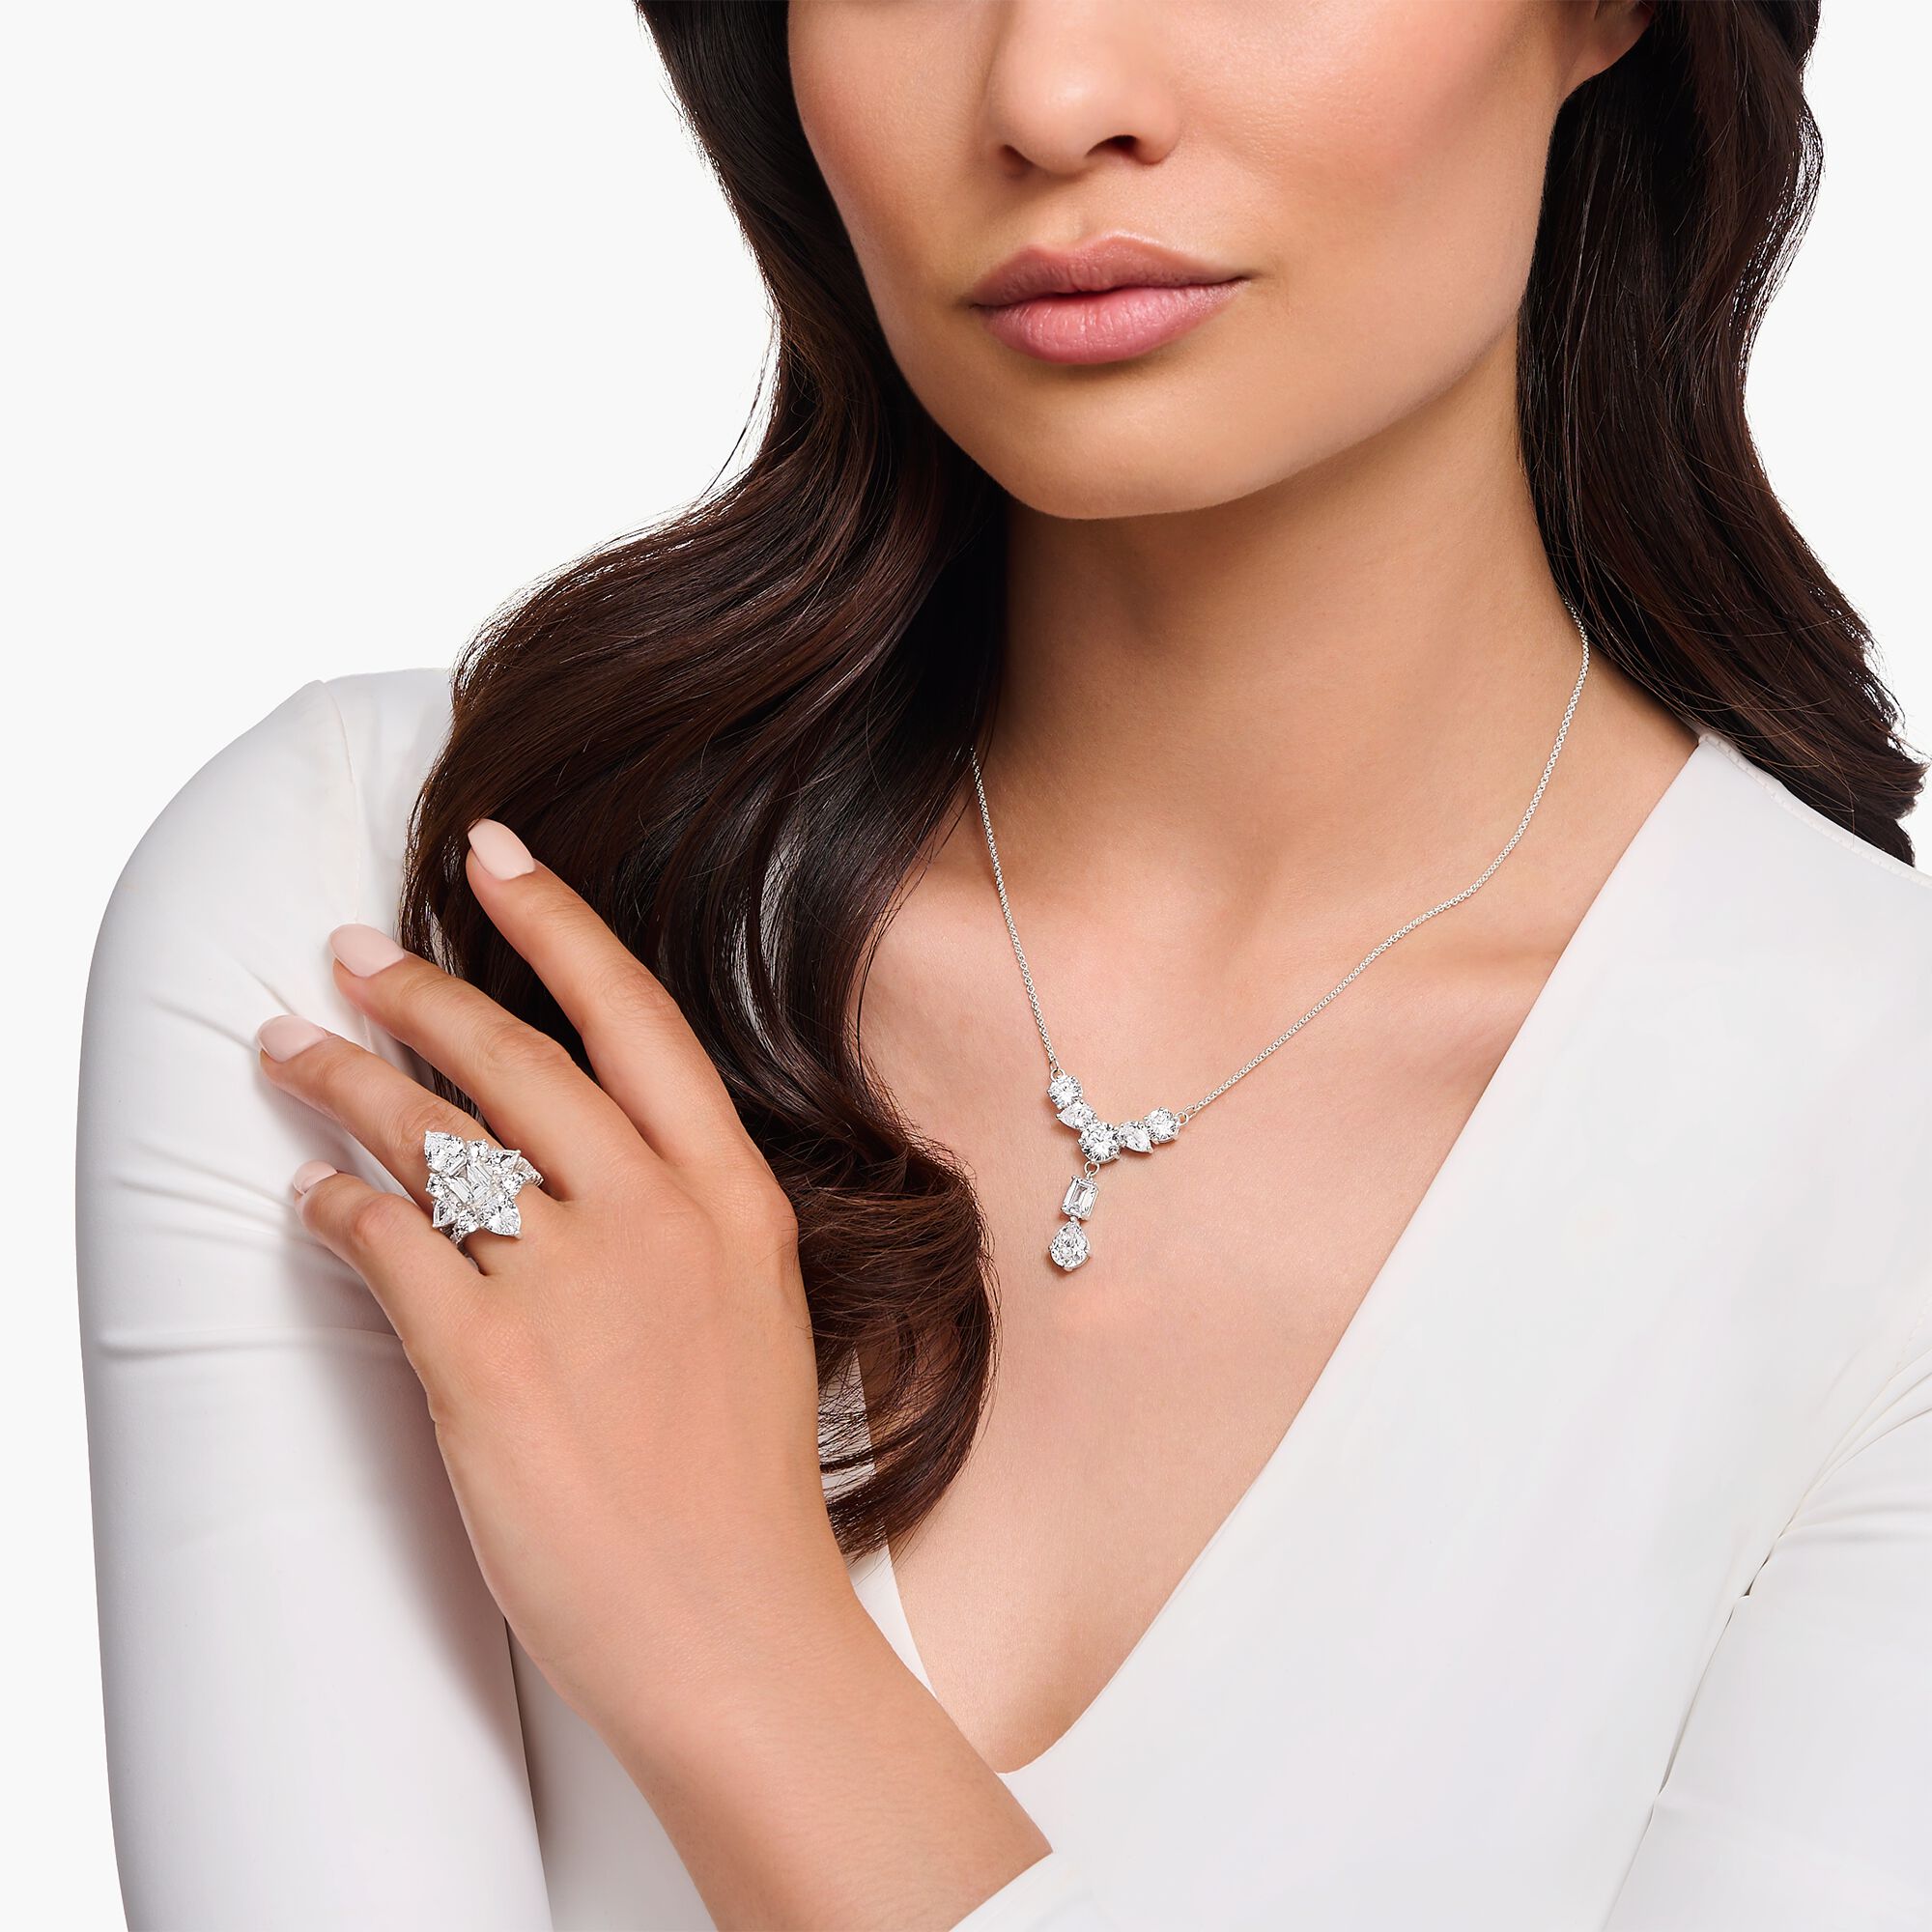 Silver necklace in | zirconia THOMAS seven SABO Y-shape white with stones